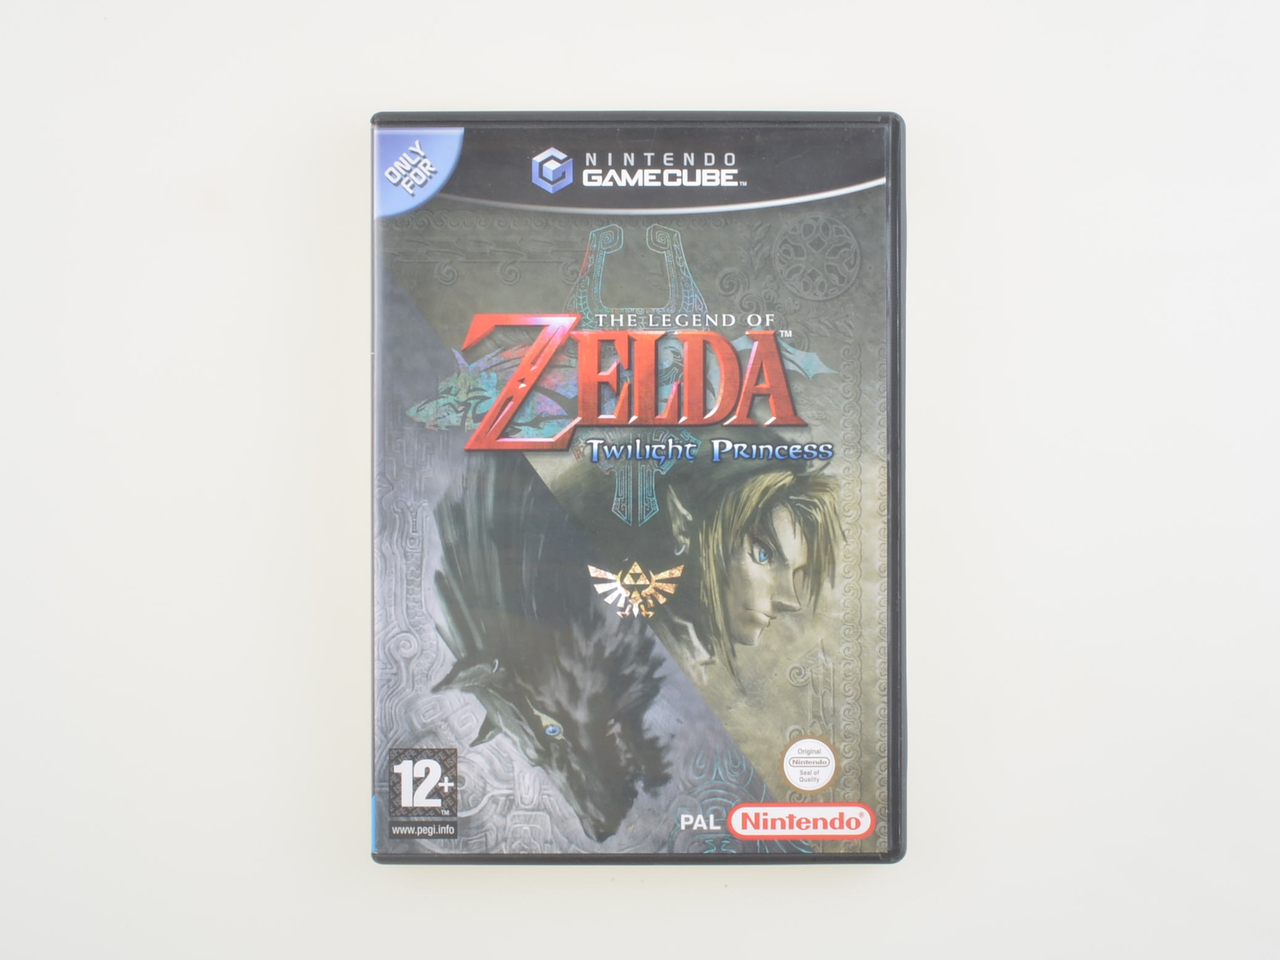 The Legend of Zelda Twilight Princess - Gamecube Games